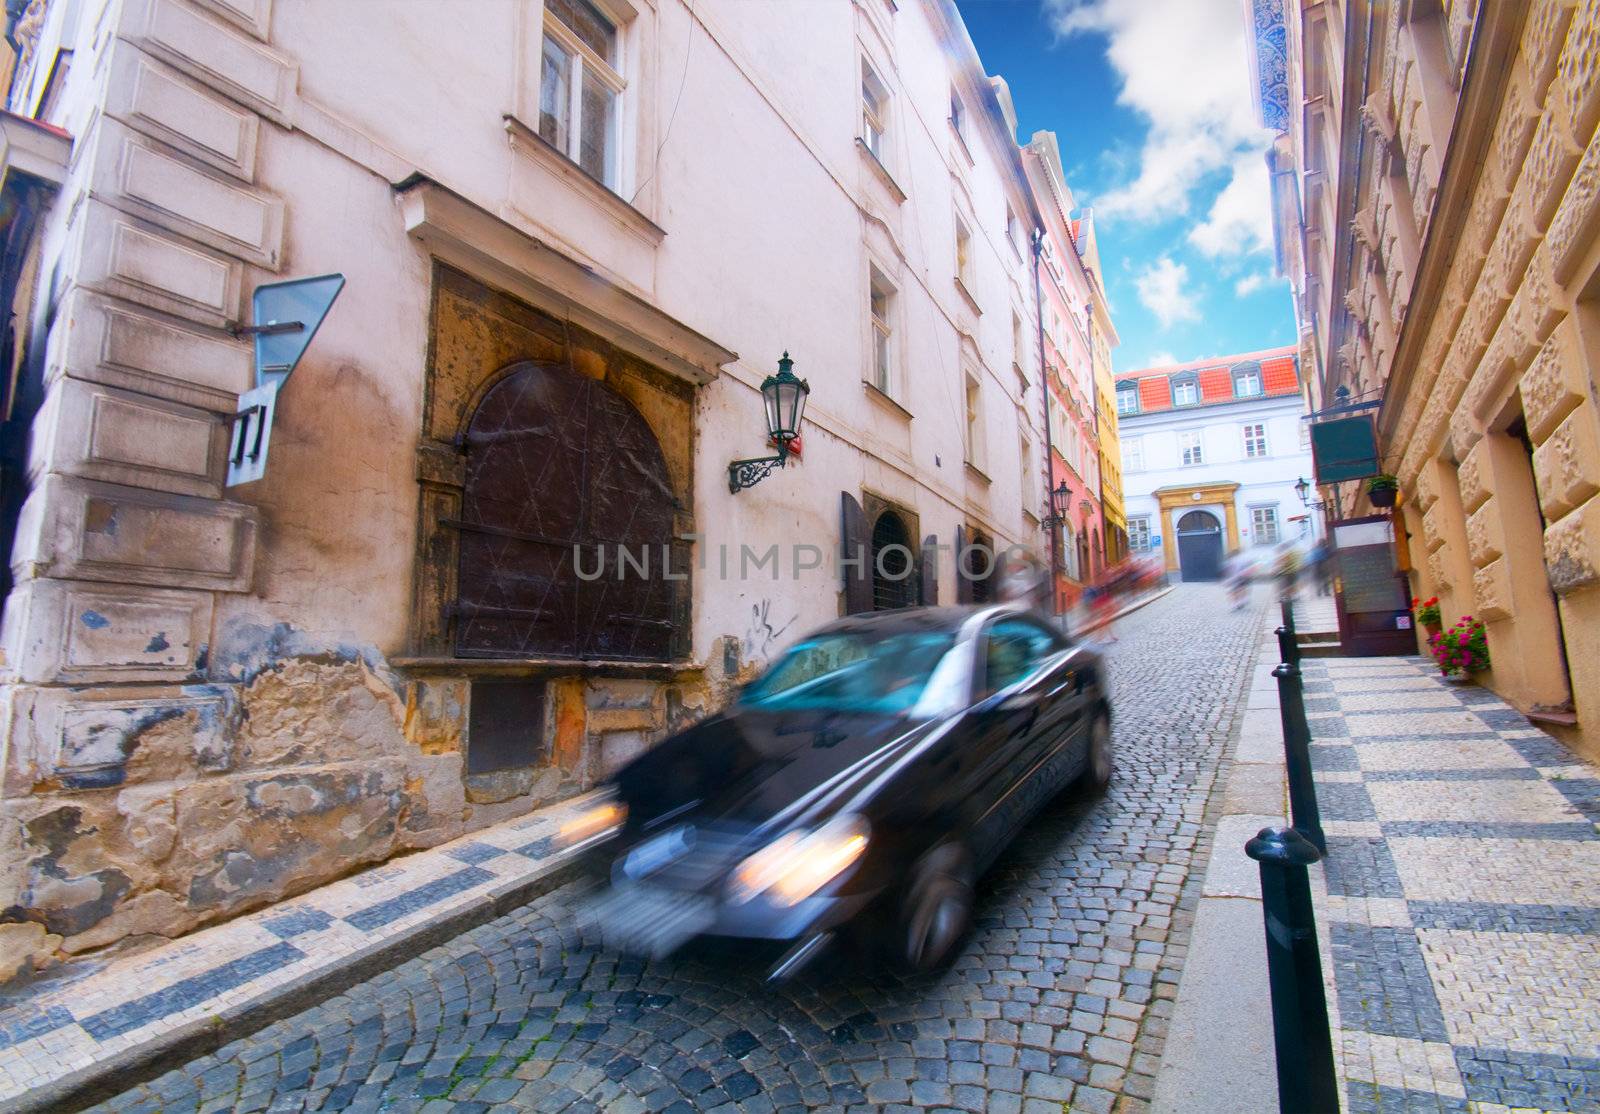 Prague. Old, charming street view